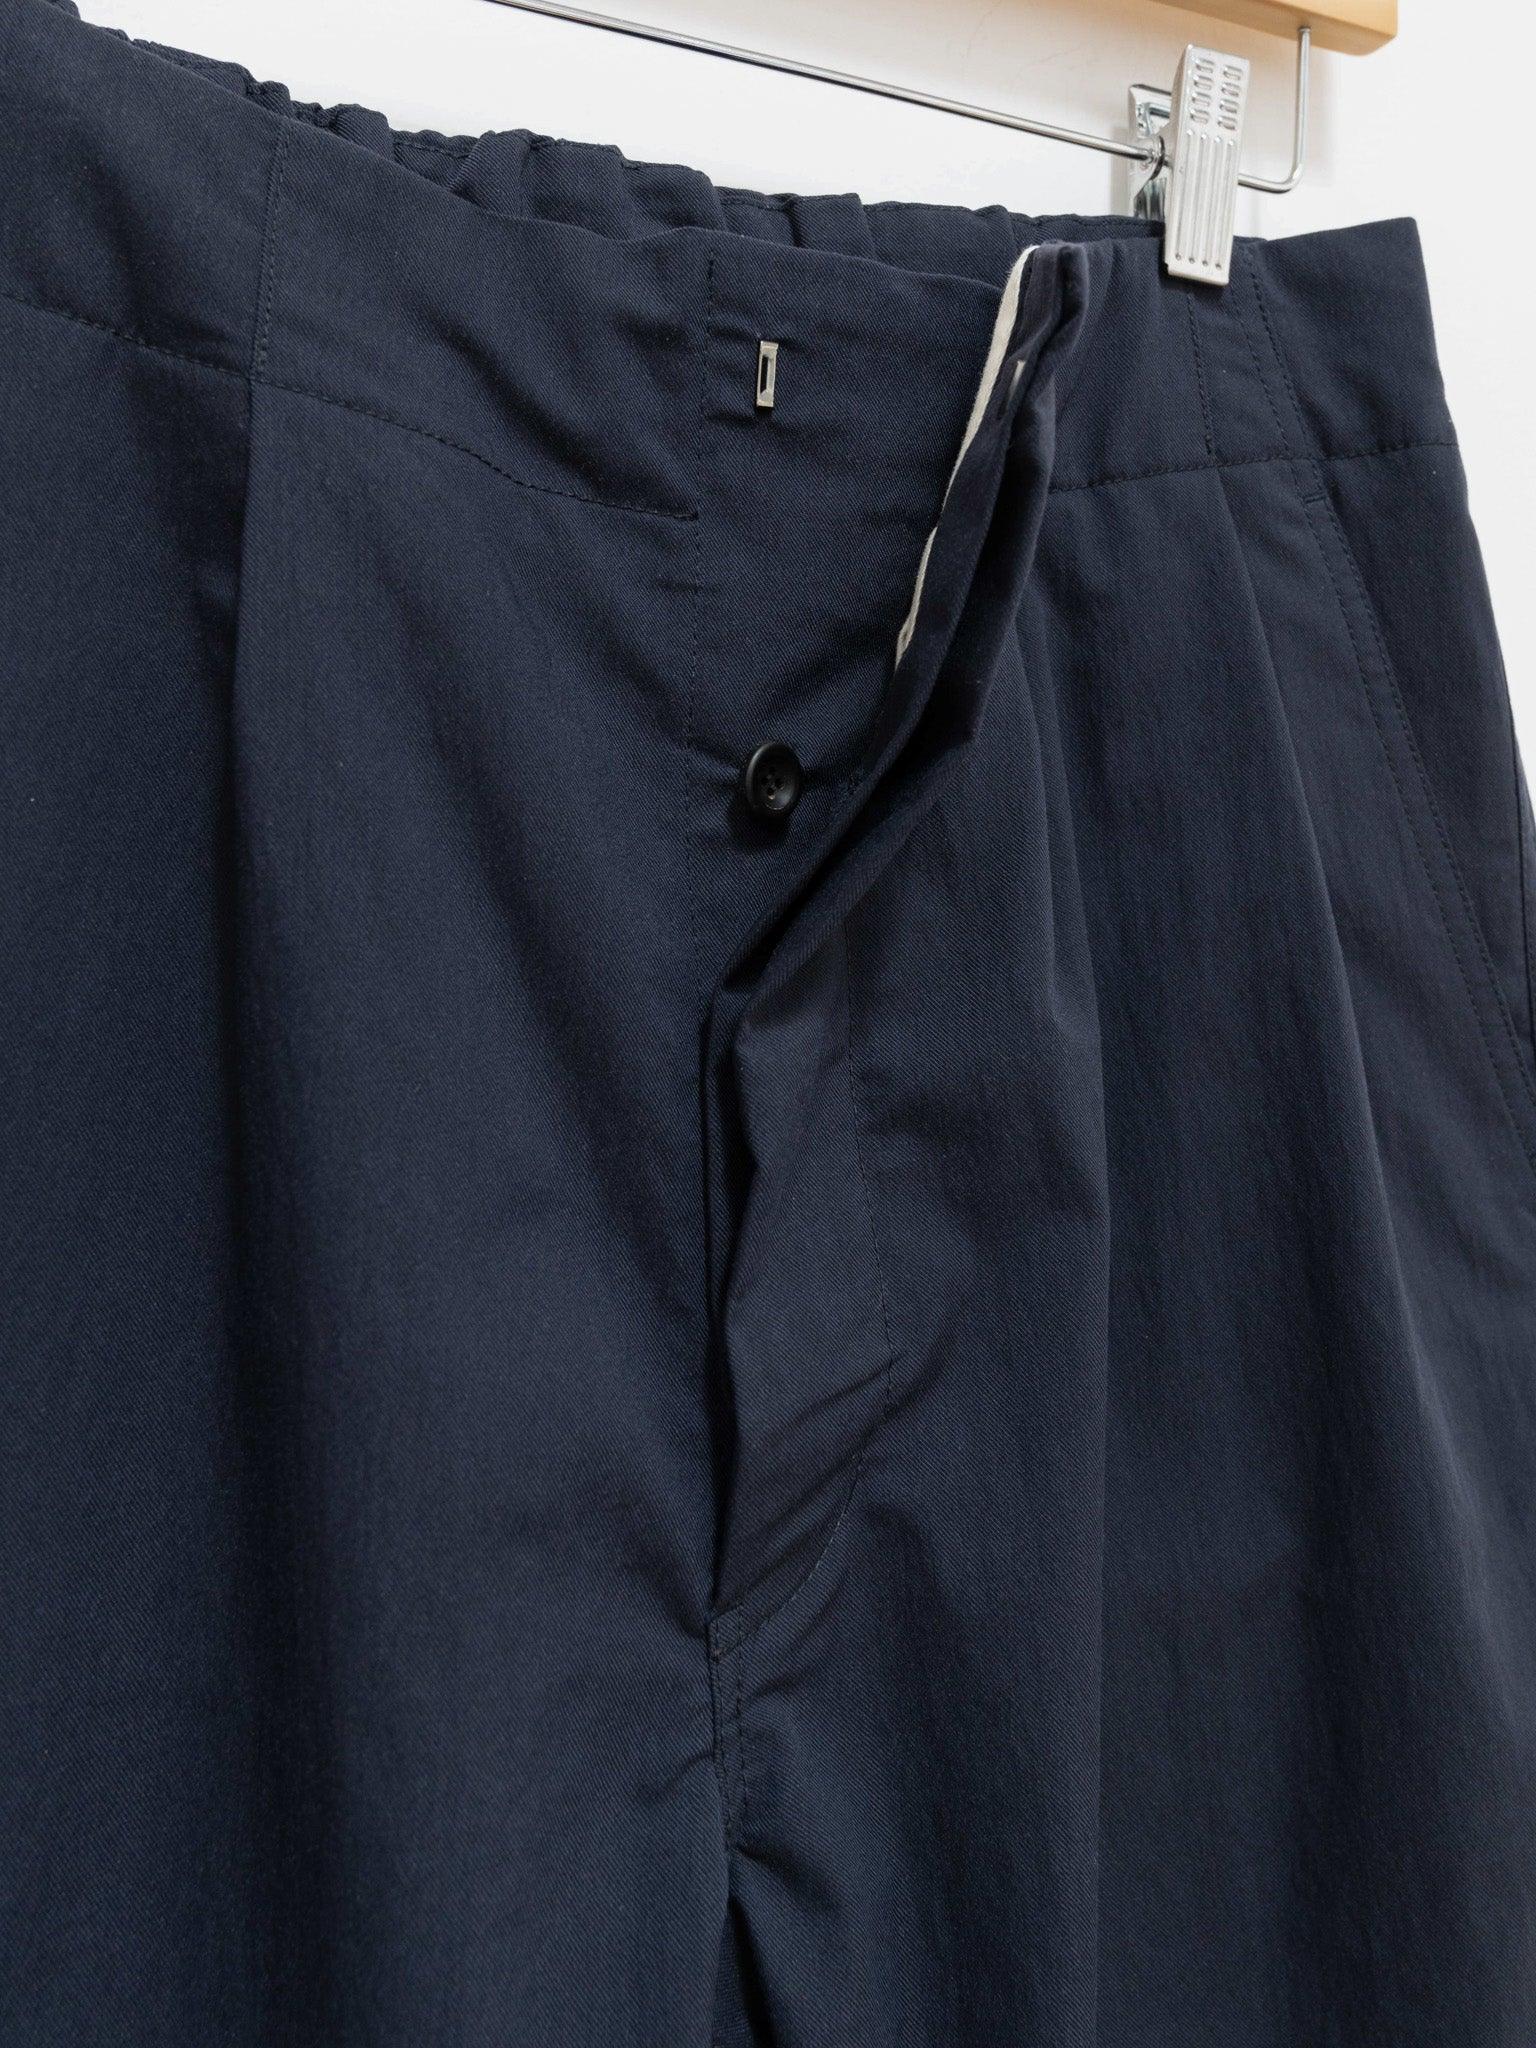 Namu Shop - Document Waterproof Tucked Shorts - Navy